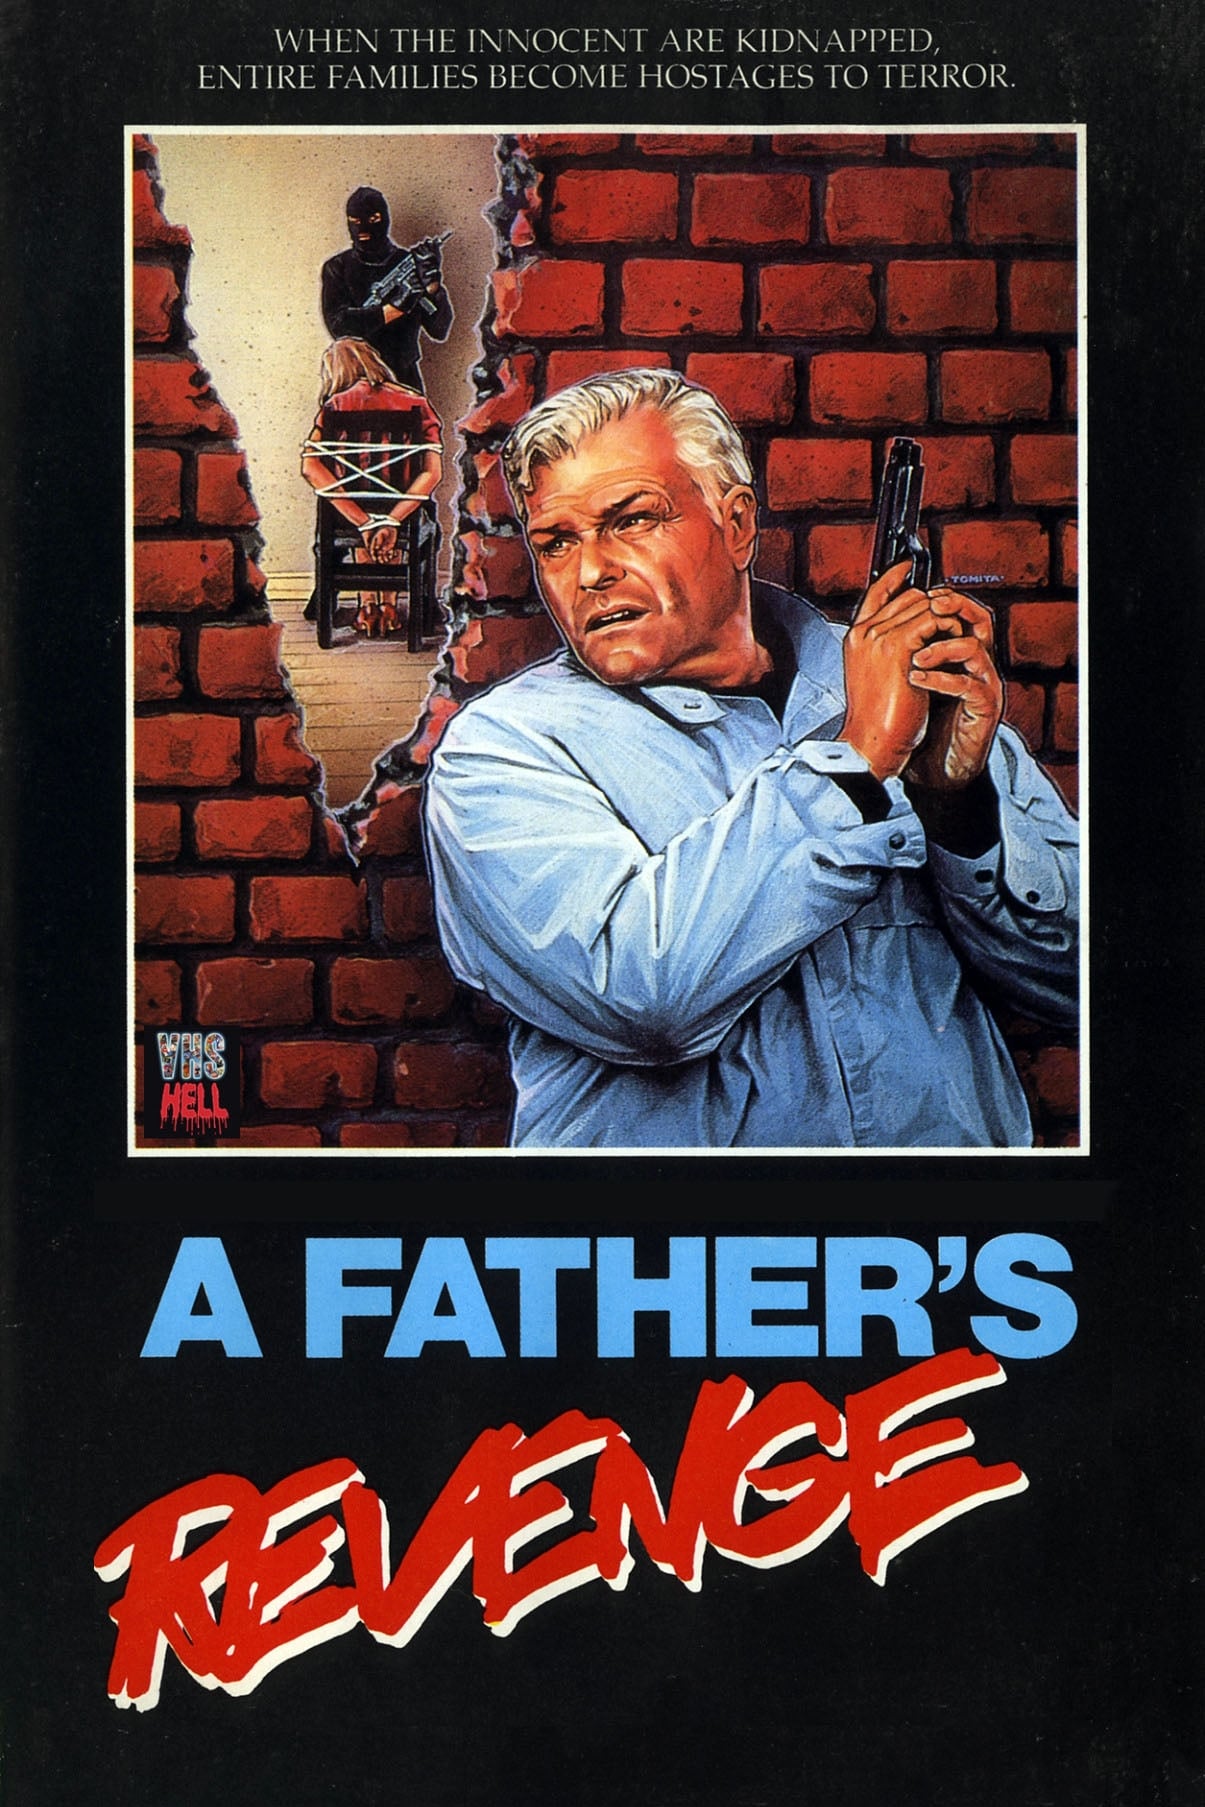 A Father's Revenge (1988)